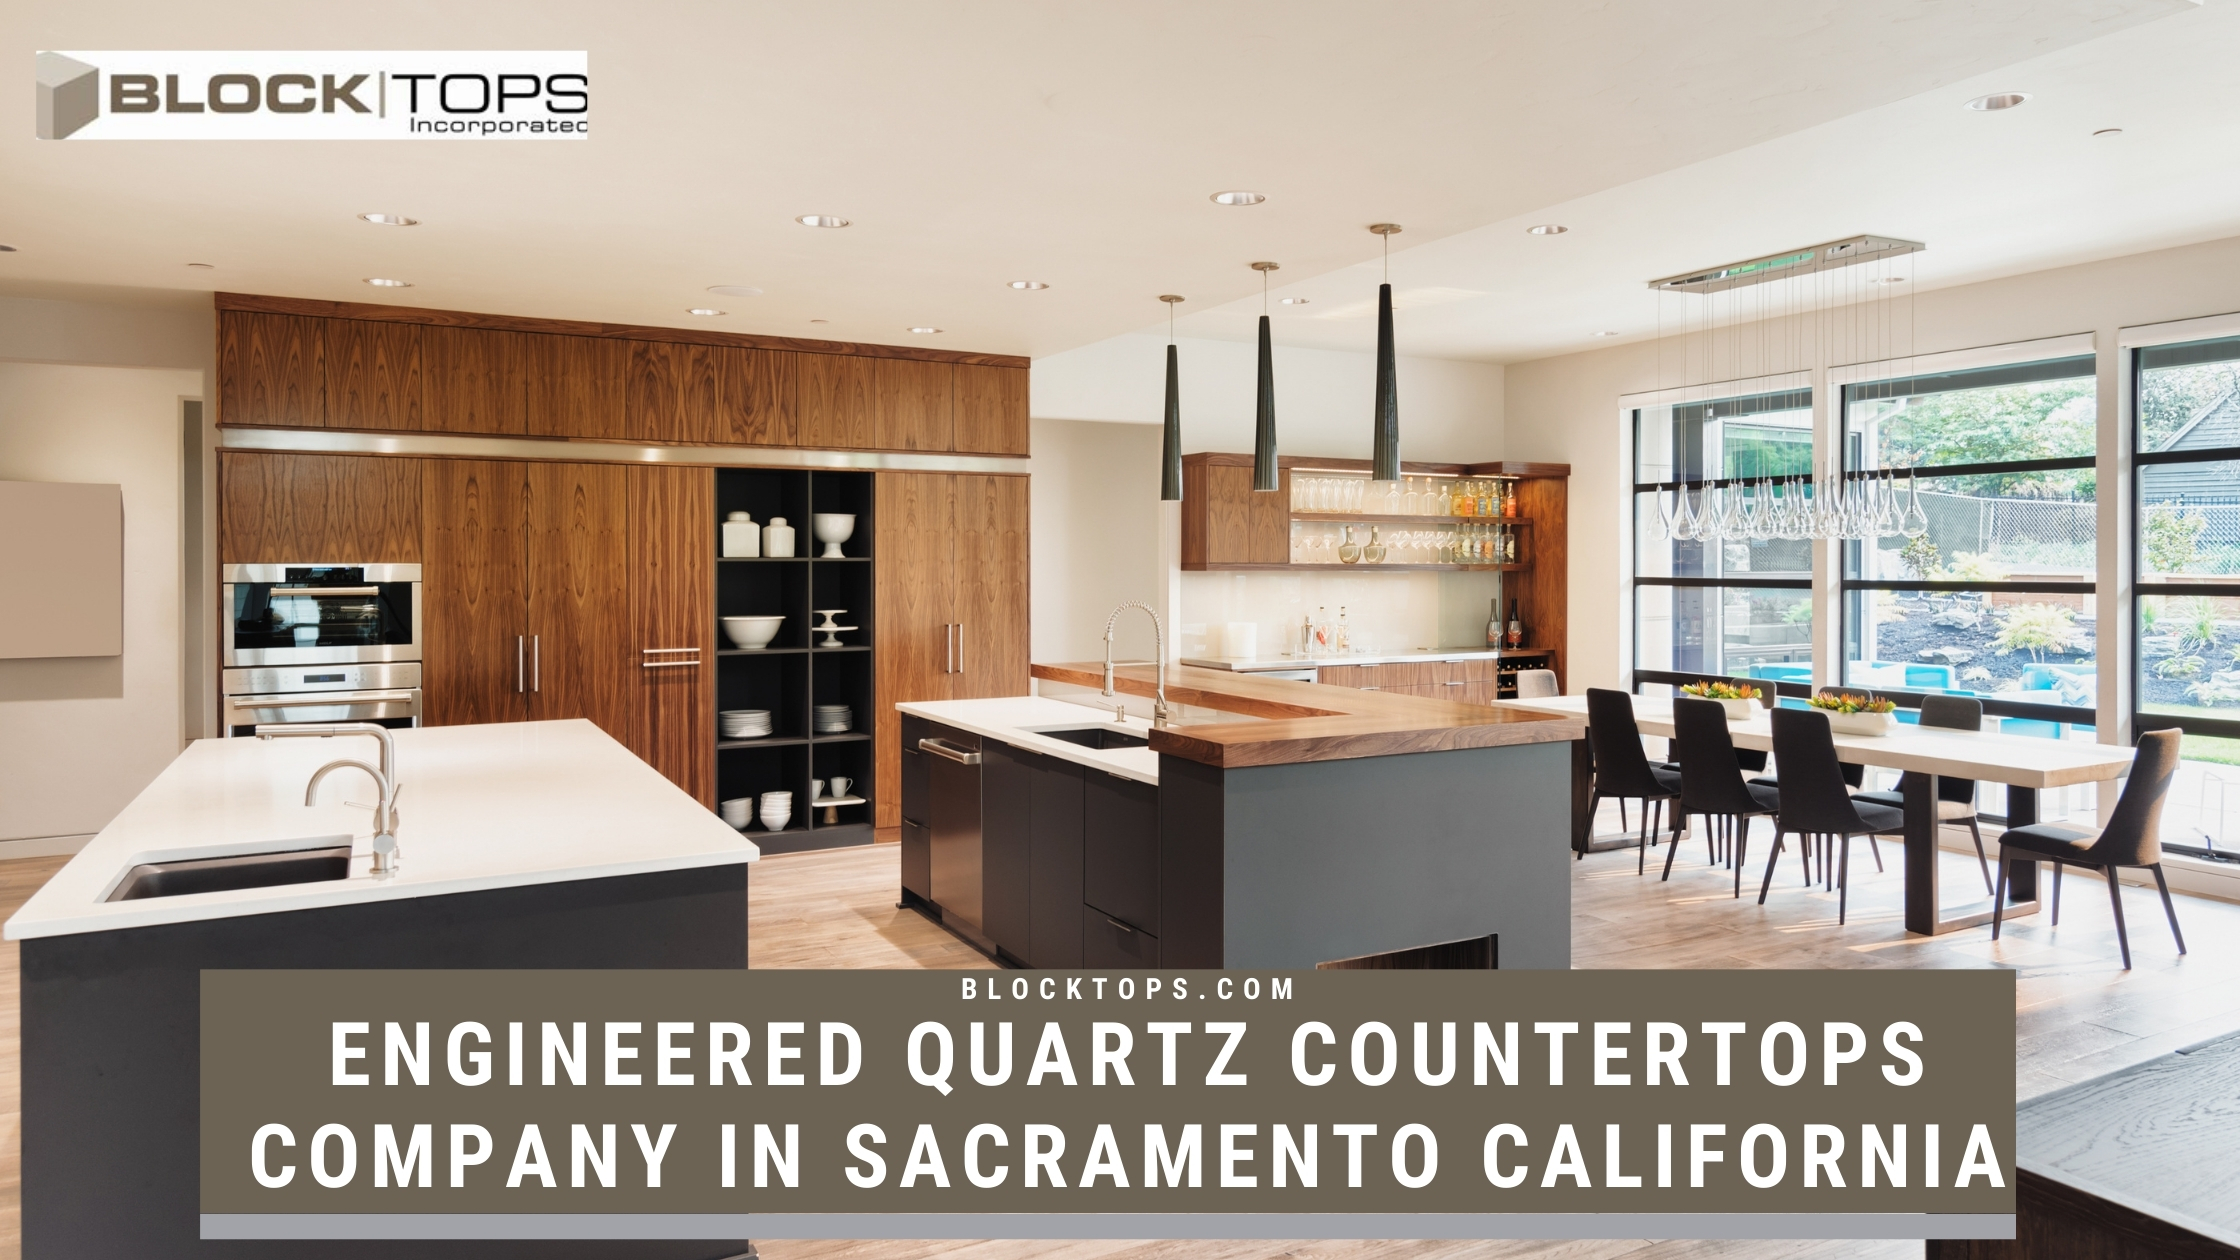 Engineered Quartz Countertops Company in Sacramento California